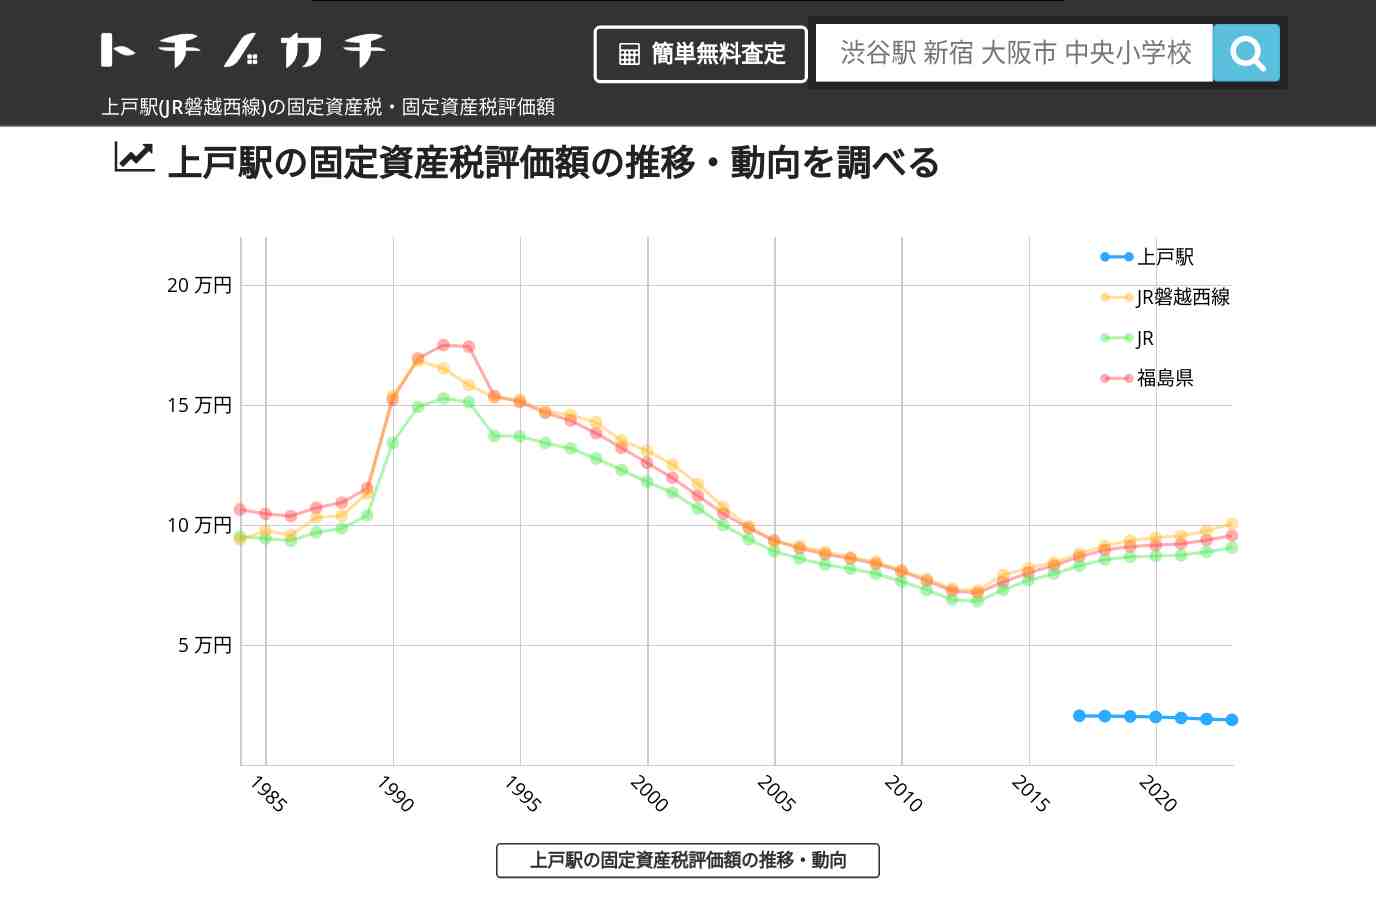 上戸駅(JR磐越西線)の固定資産税・固定資産税評価額 | トチノカチ